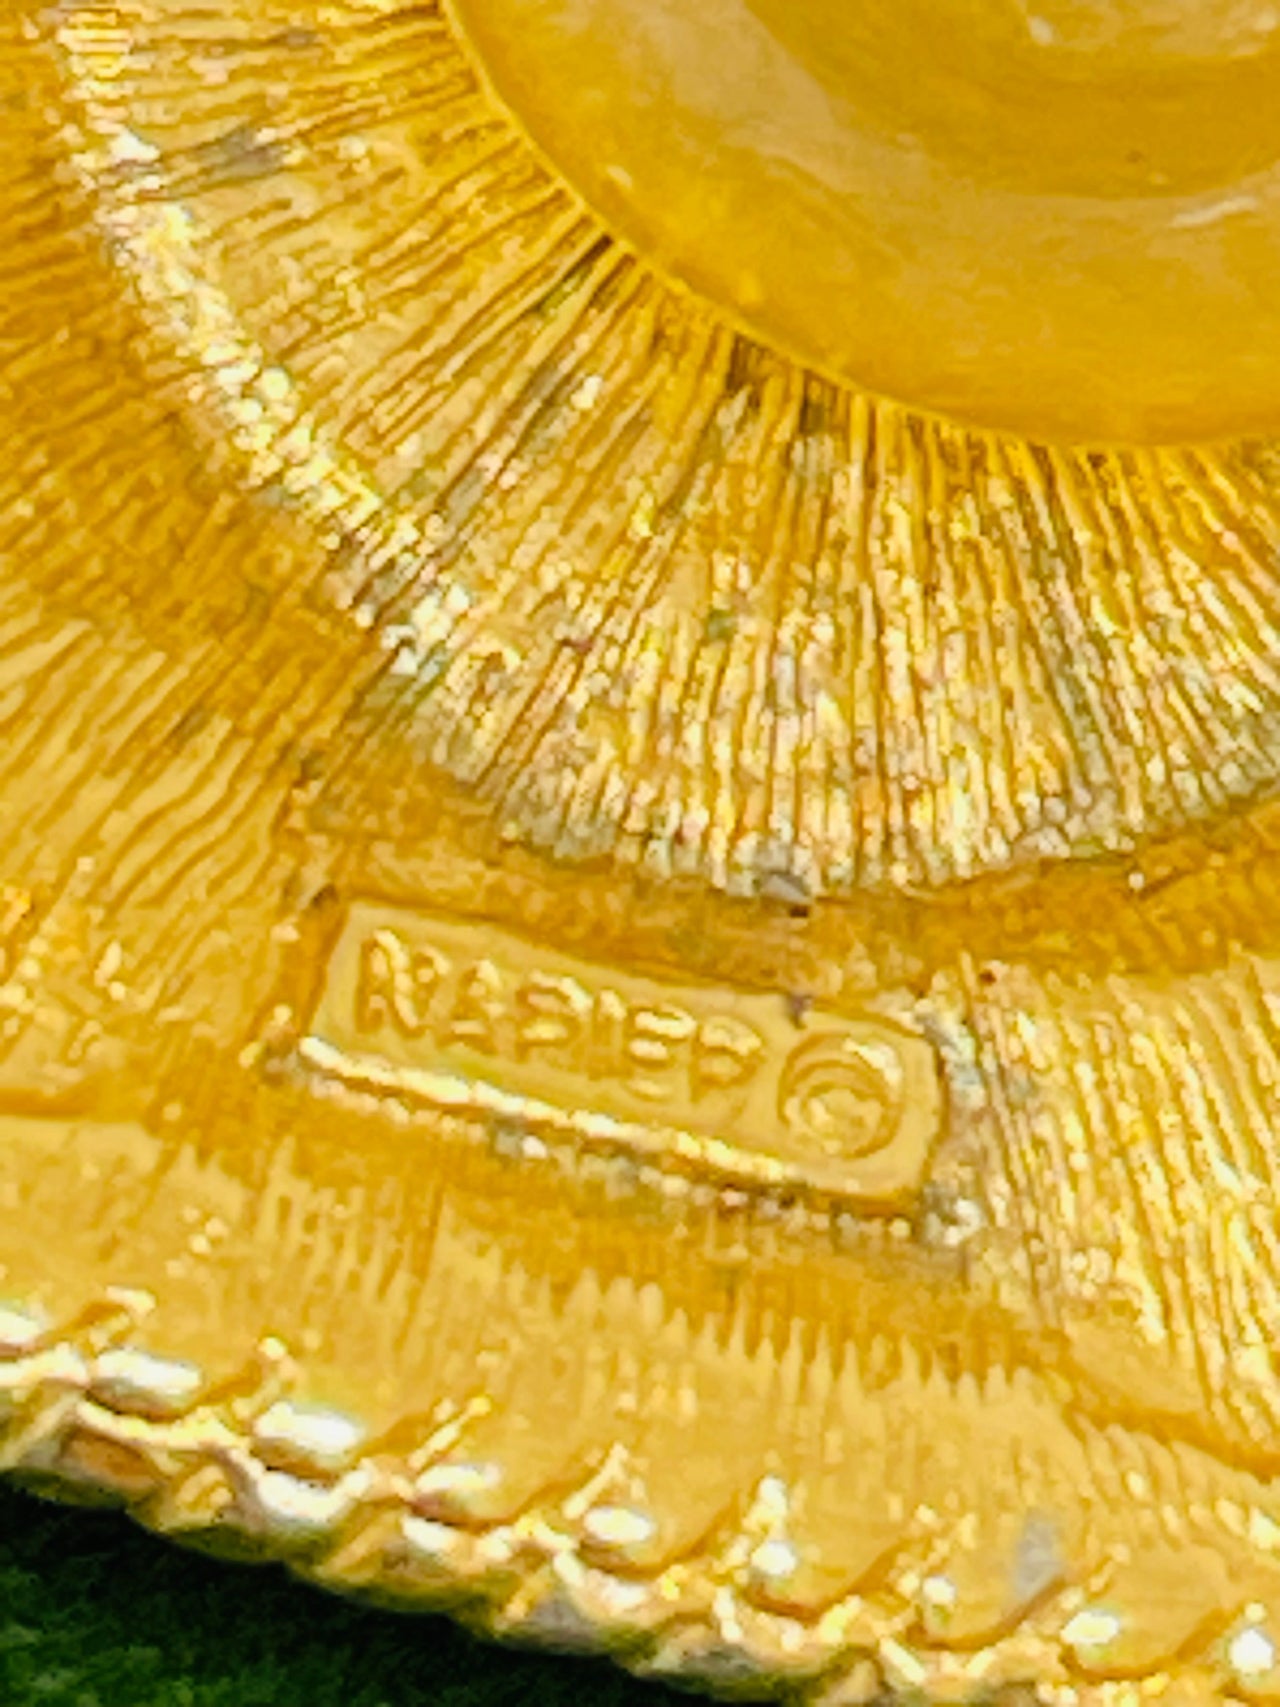 Napier Square Gold Clip On Earrings with Black Enamel Dome Devil's Details 